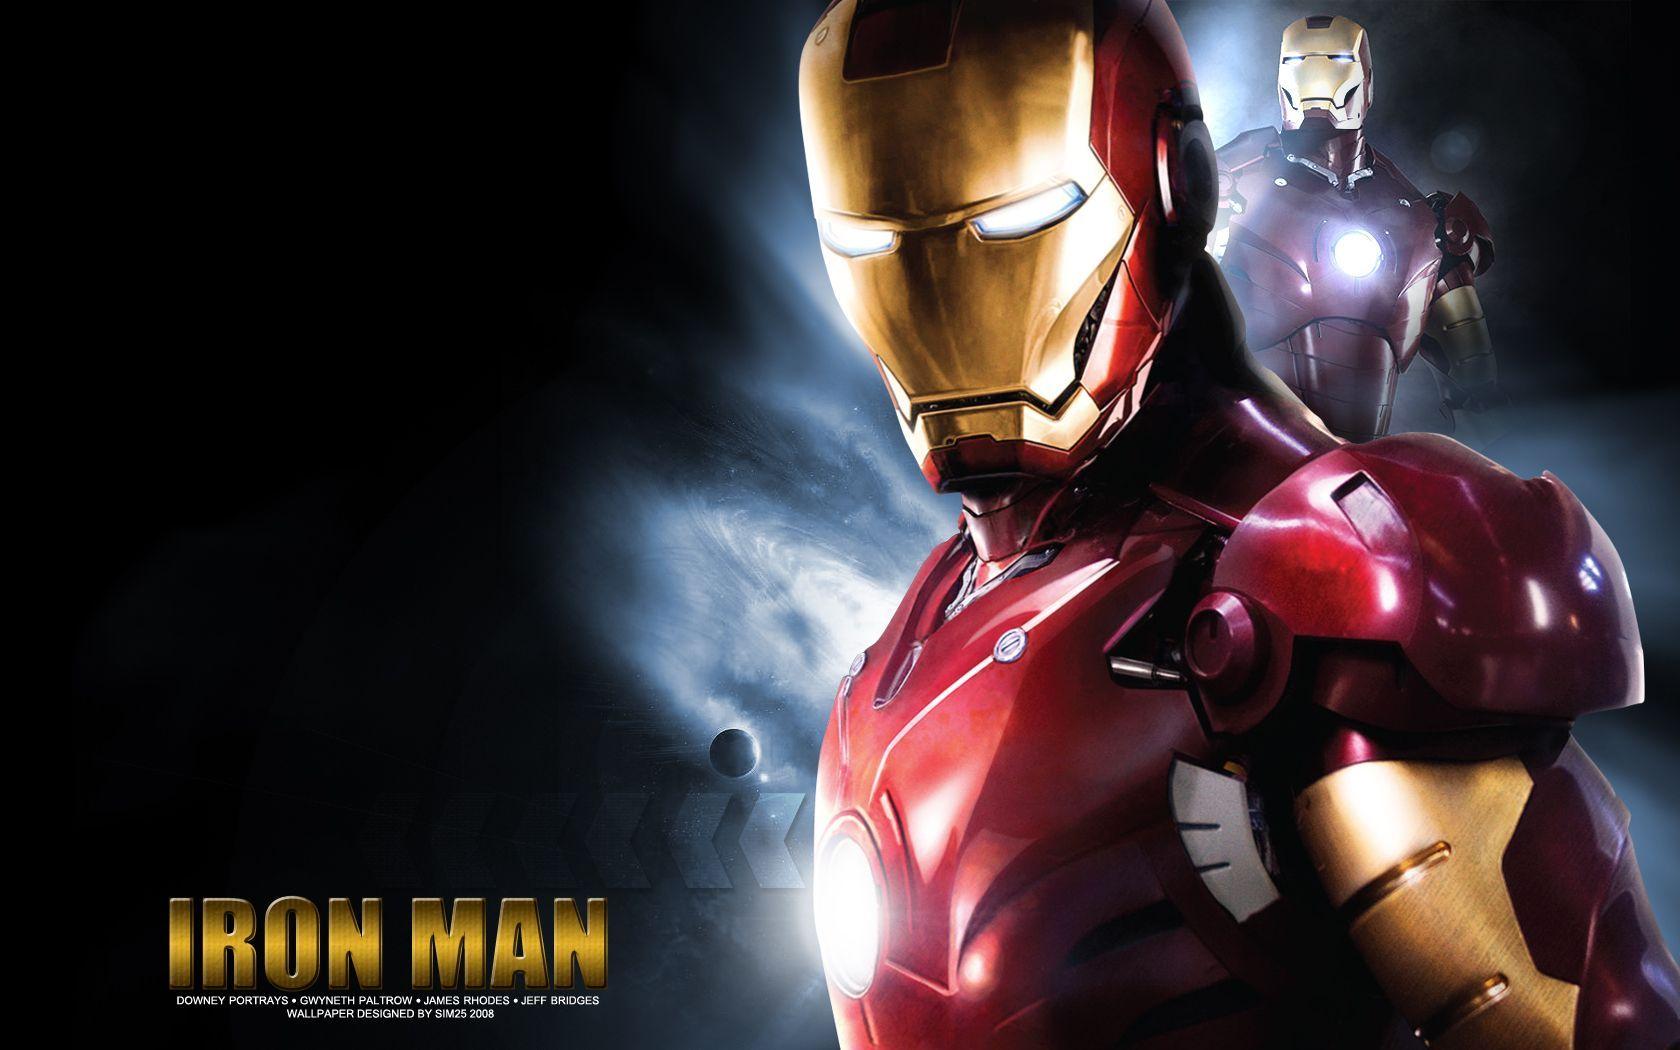 Iron man movie wallpaper HD. Background HD Wallpaper for Desktop